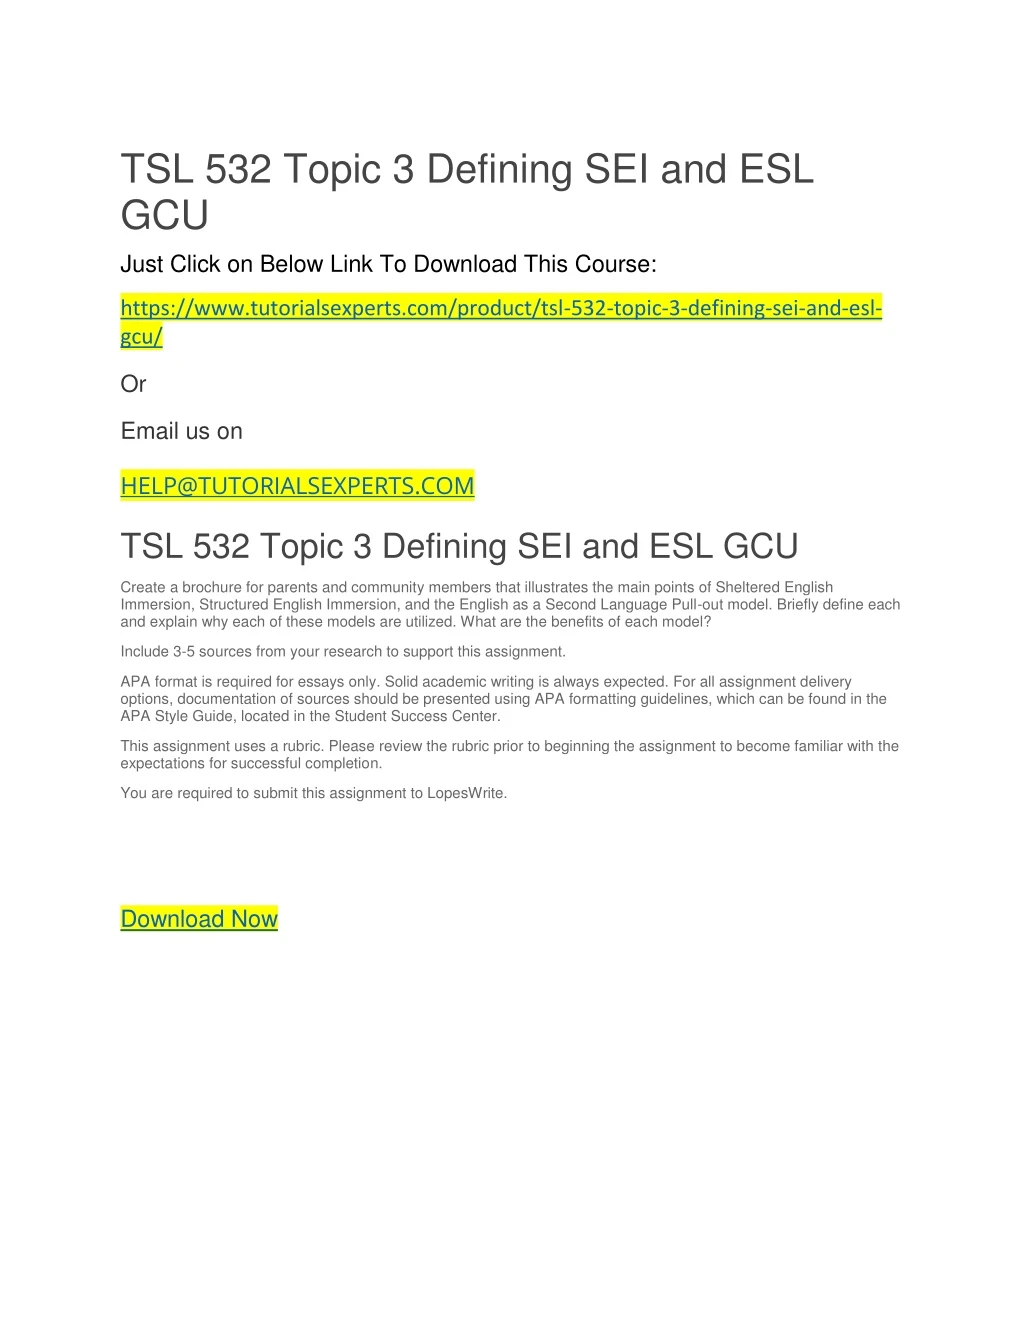 tsl 532 topic 3 defining sei and esl gcu just